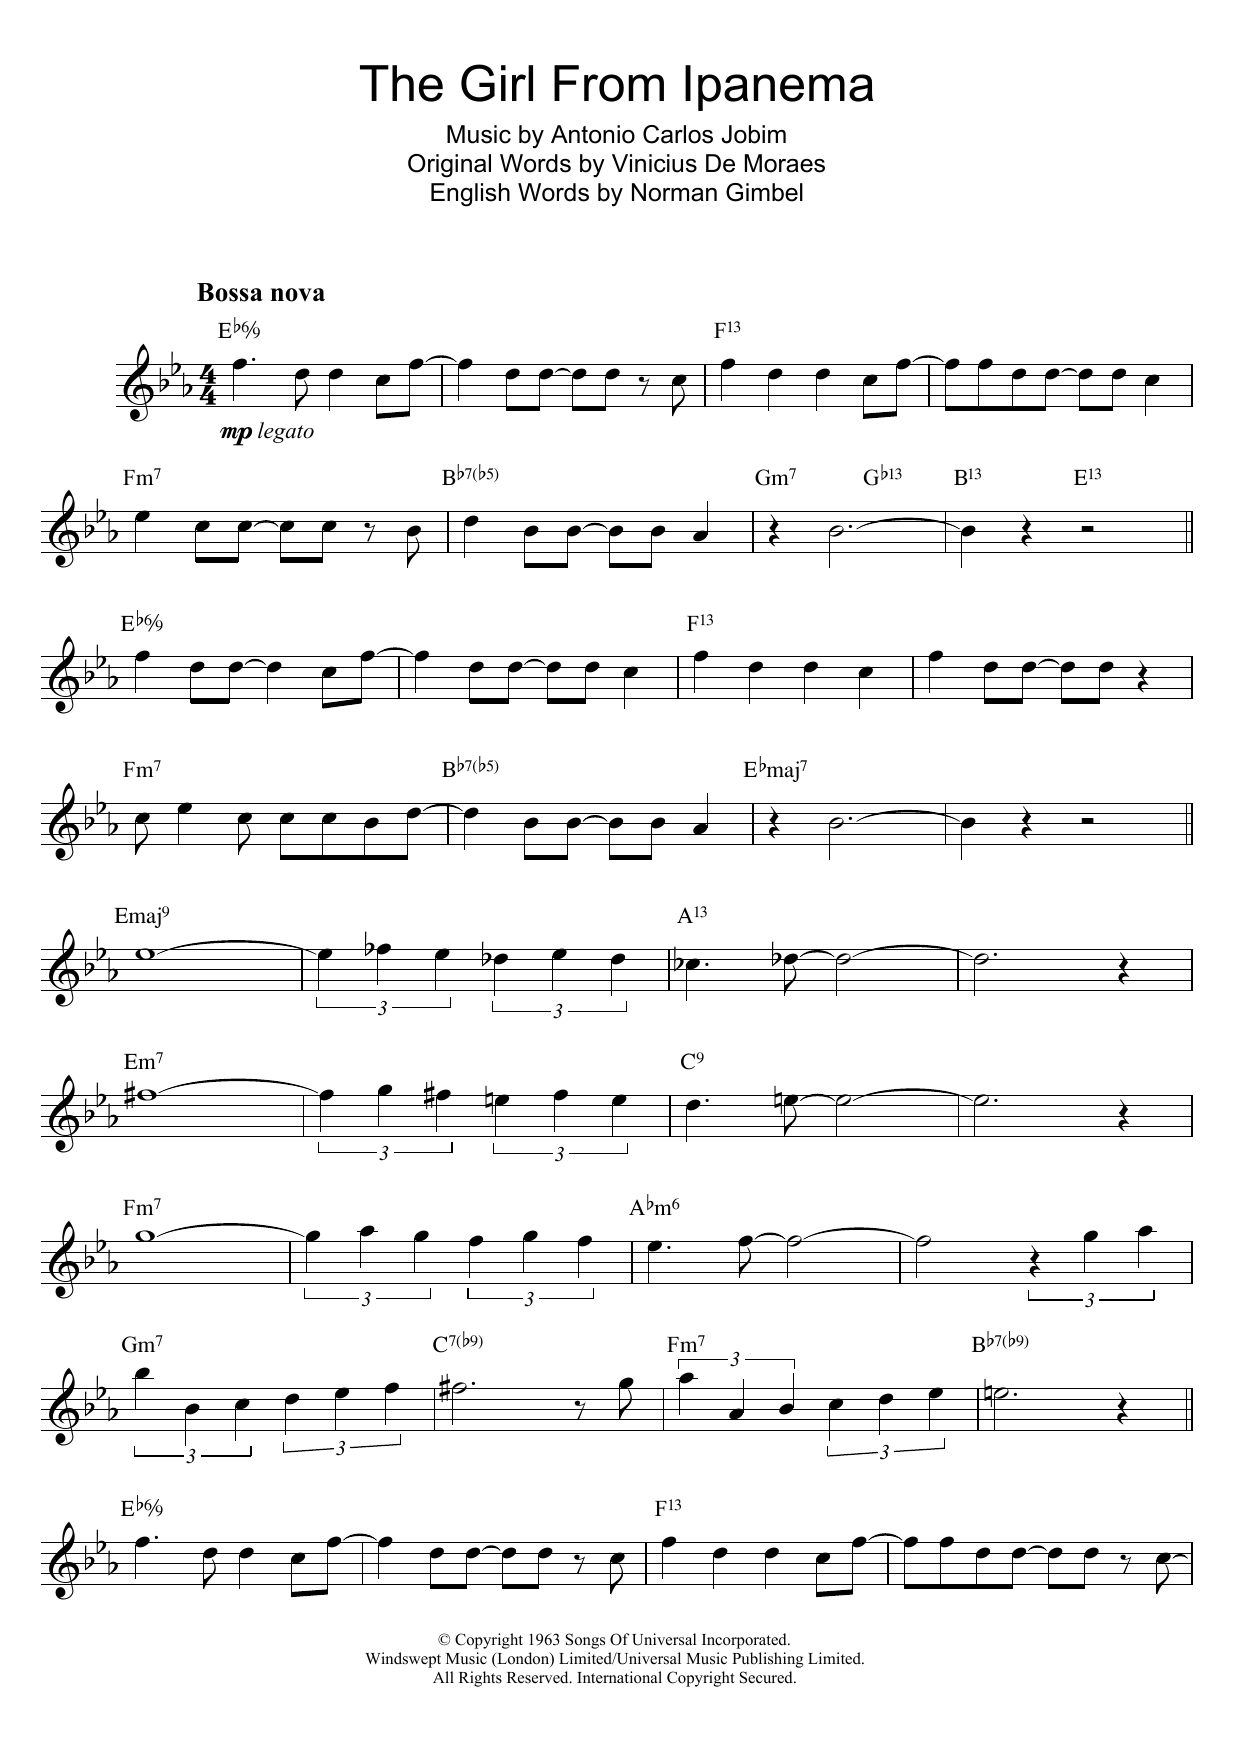 Antonio Carlos Jobim The Girl From Ipanema (Garota De Ipanema) Sheet Music Notes & Chords for Flute - Download or Print PDF